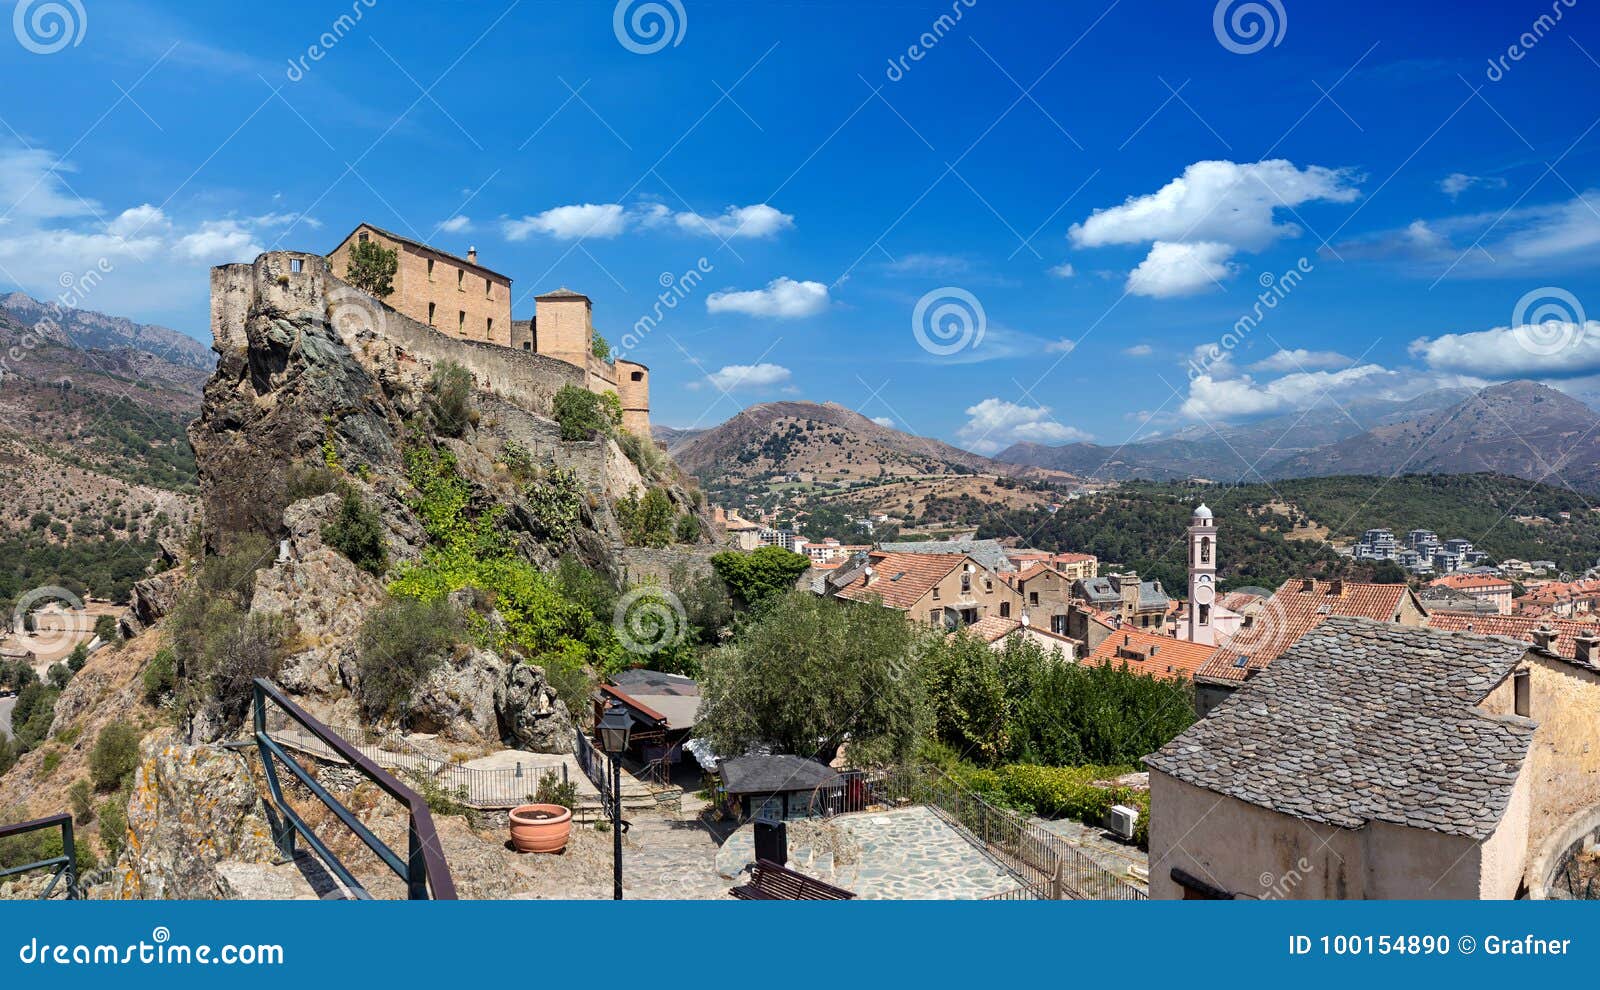 citadel and historical city of corte corsica